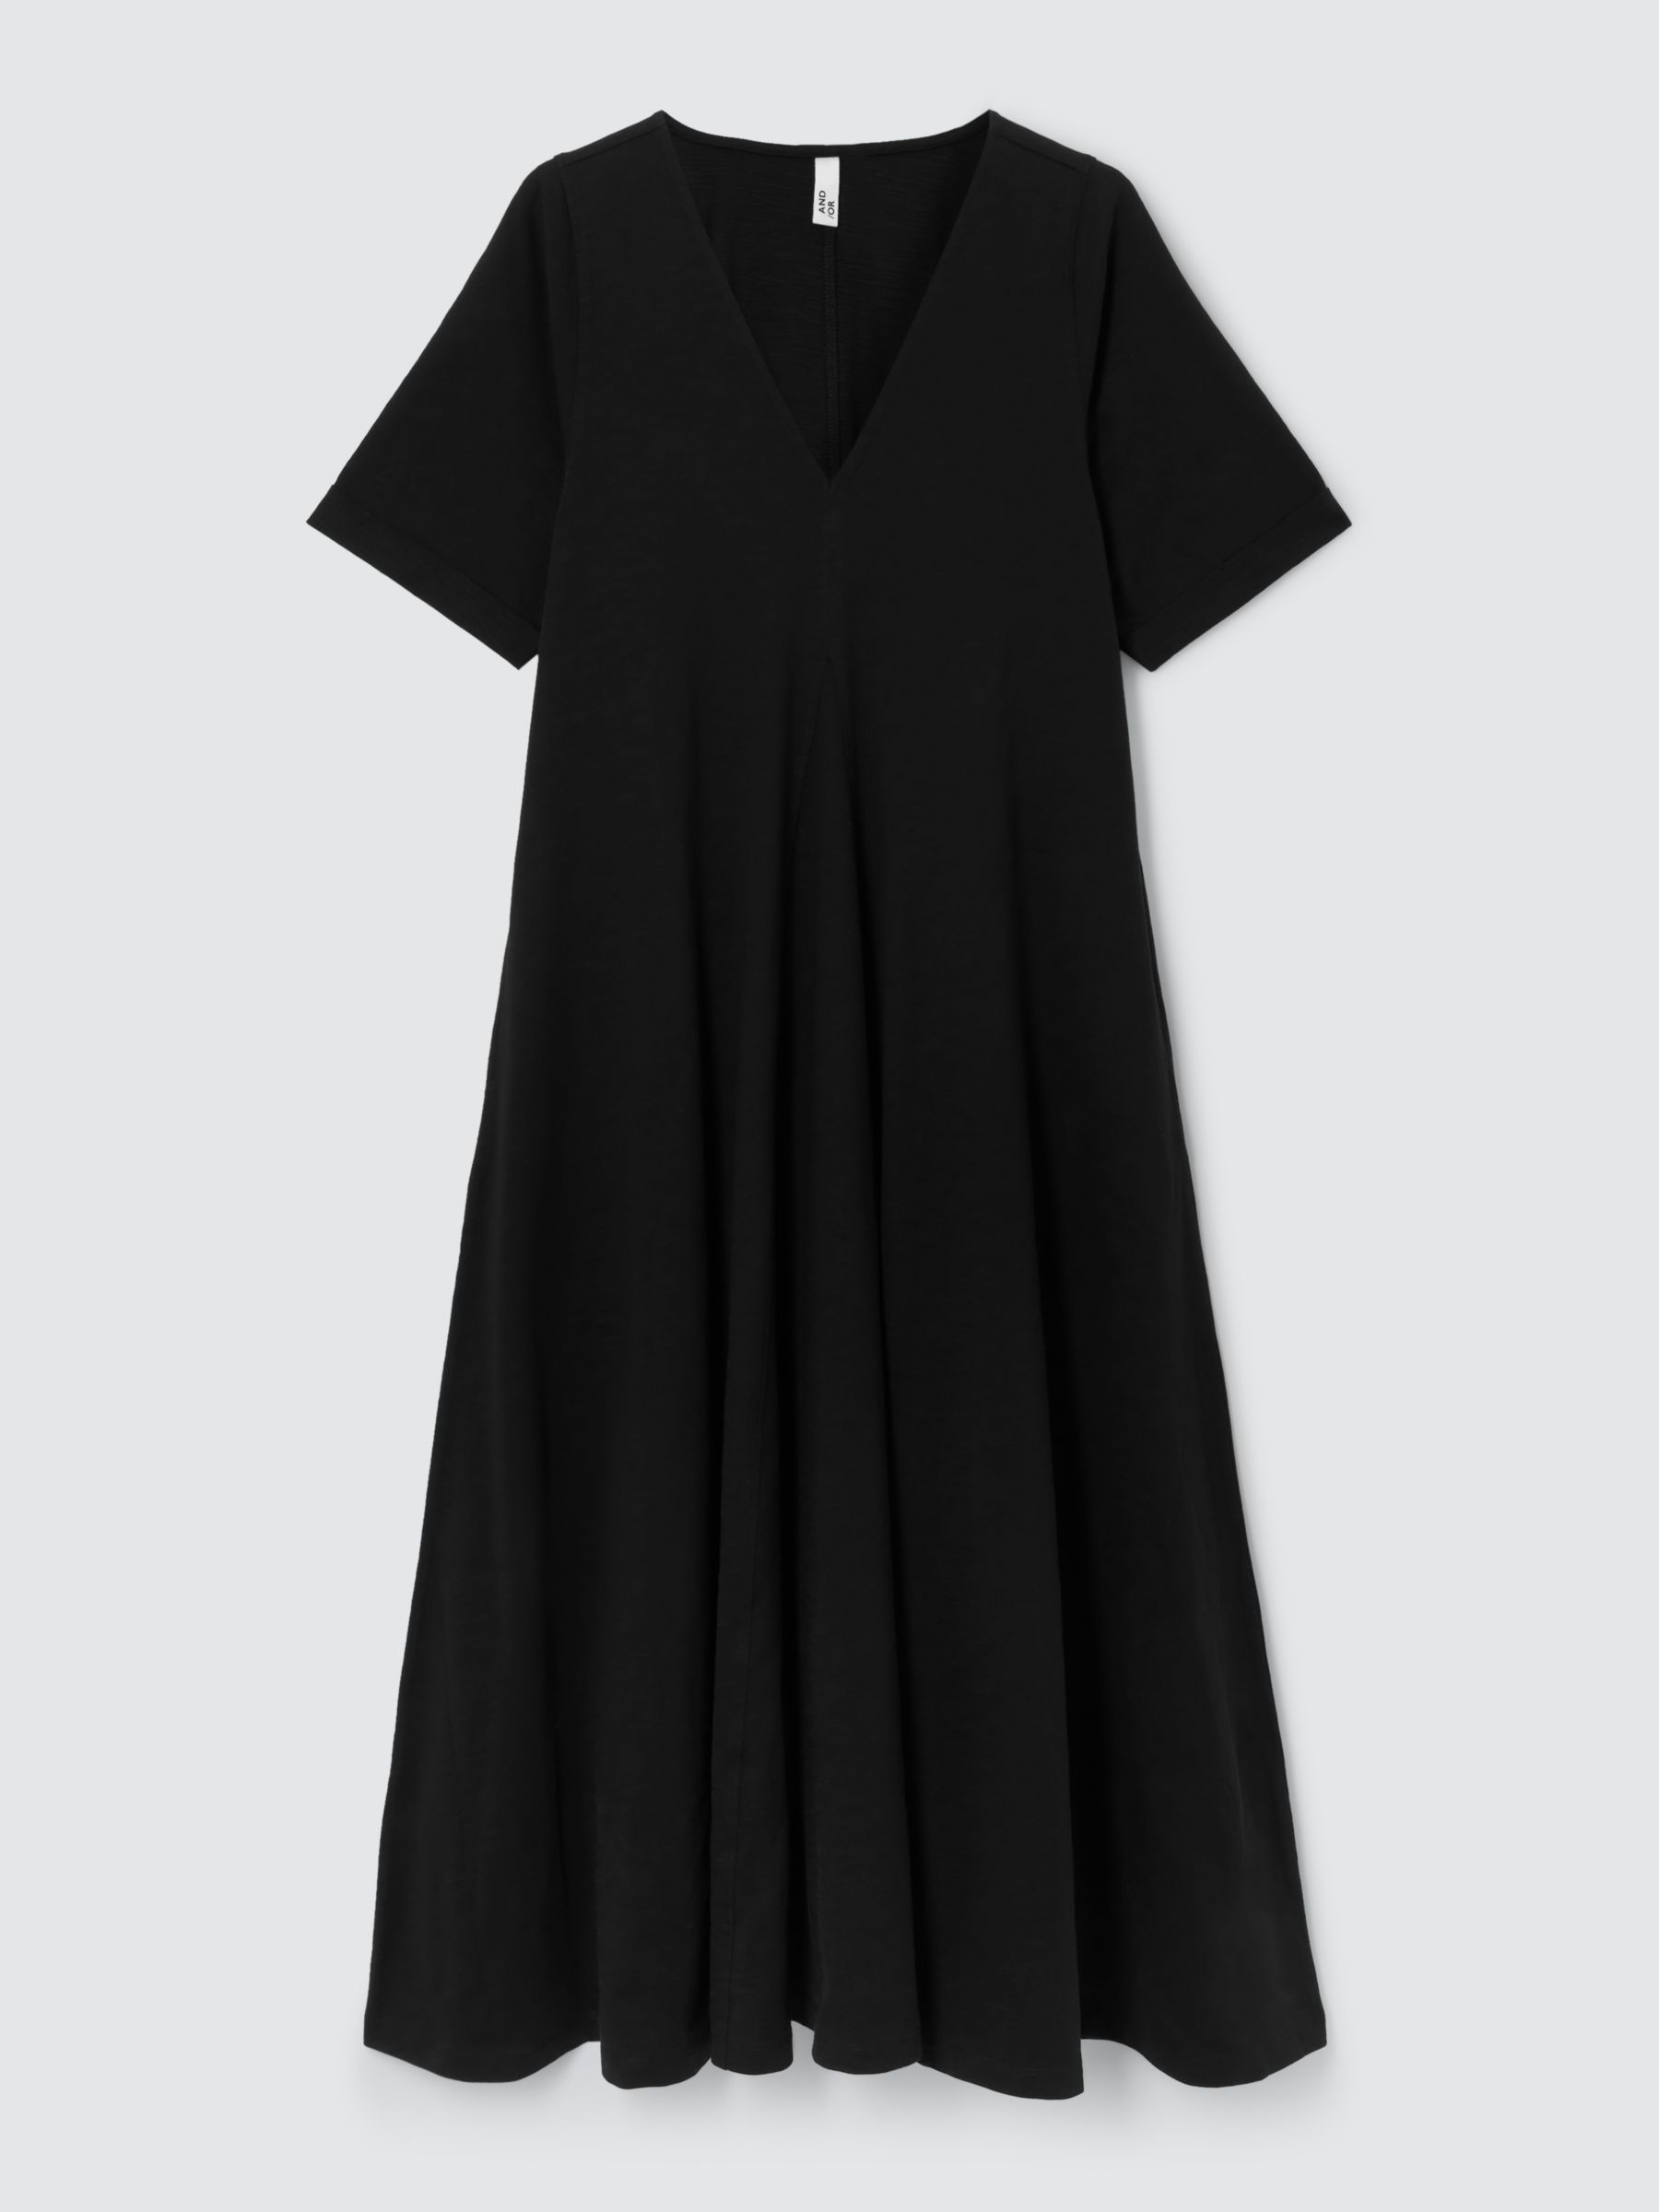 AND/OR Alex Pleat Midi Dress, Black at John Lewis & Partners